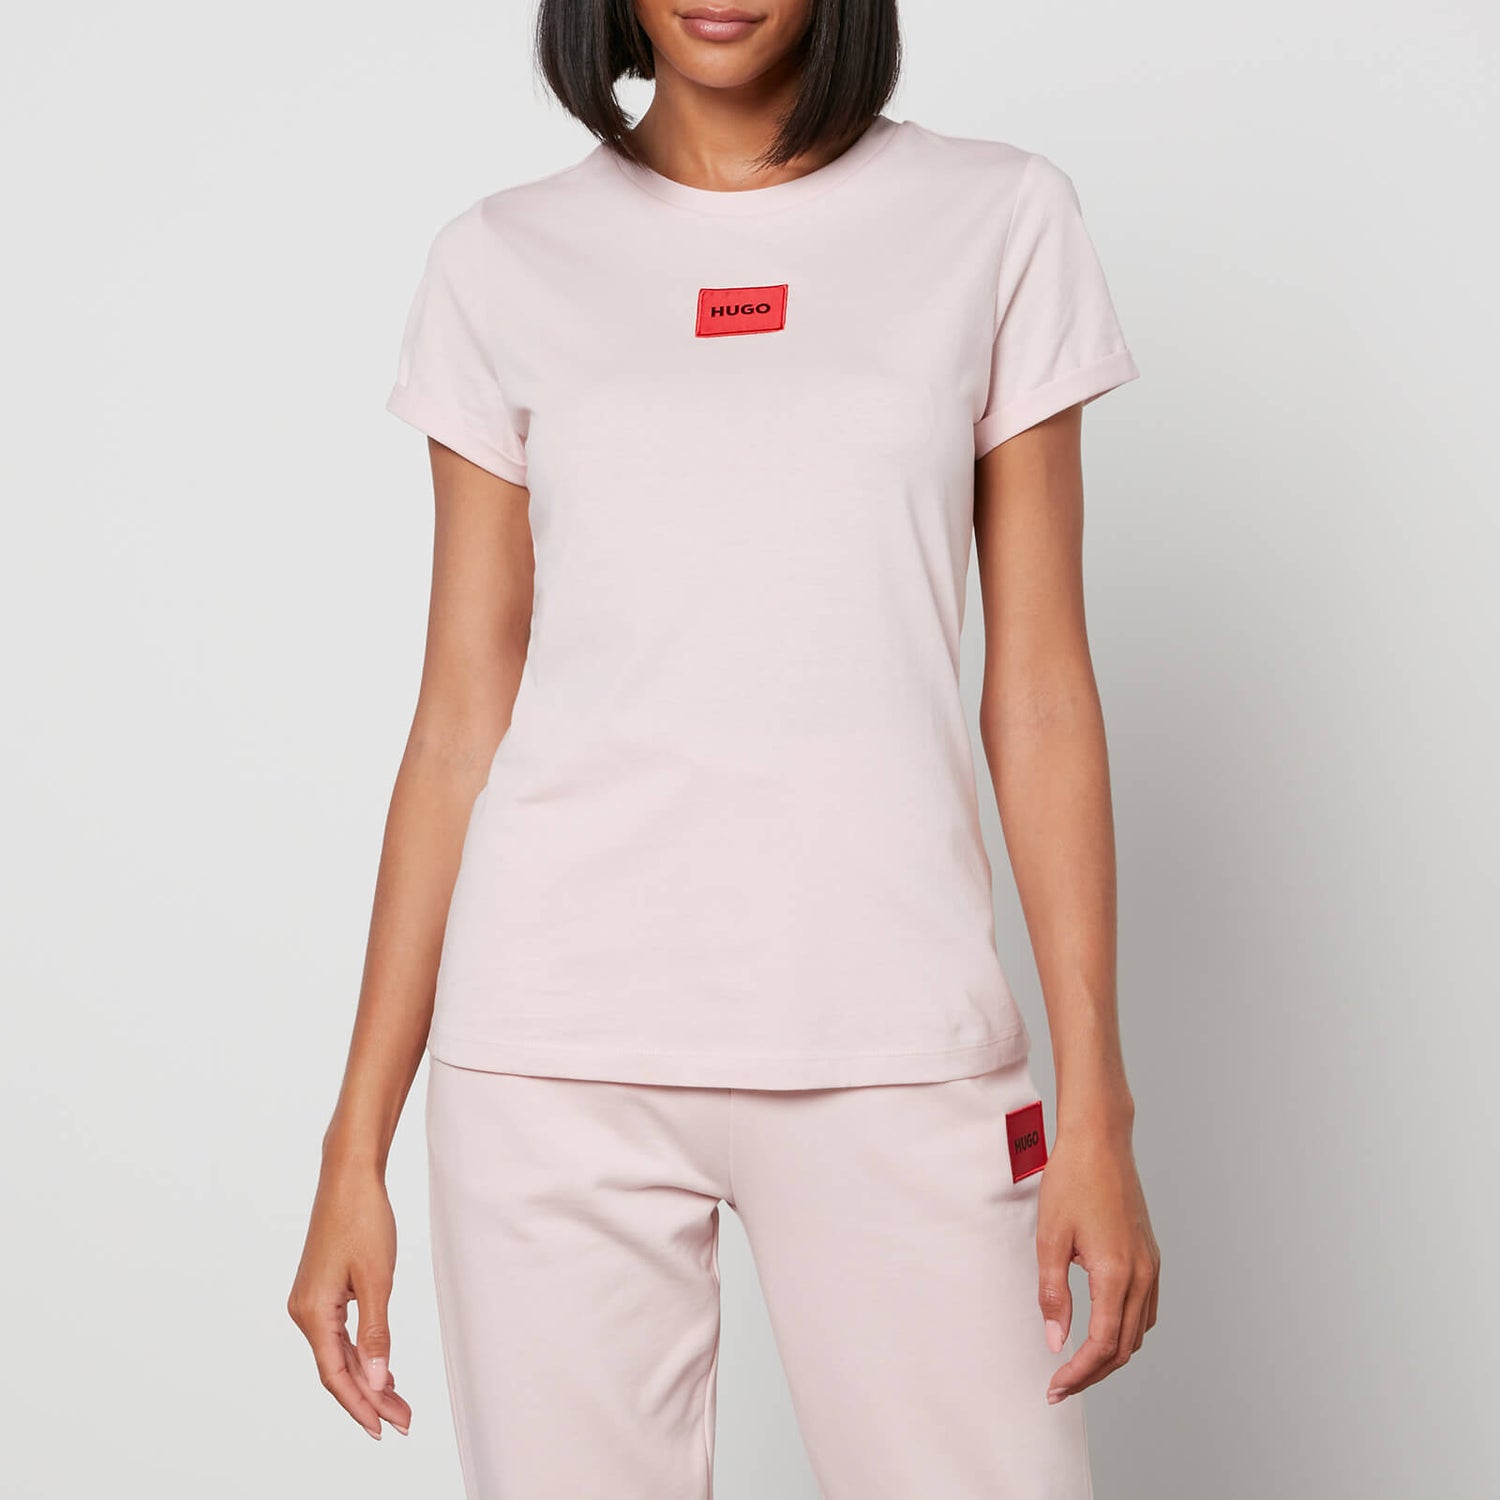 HUGO Women's The Slim Tee Red Label T-Shirt - Light/Pastel Pink - XS